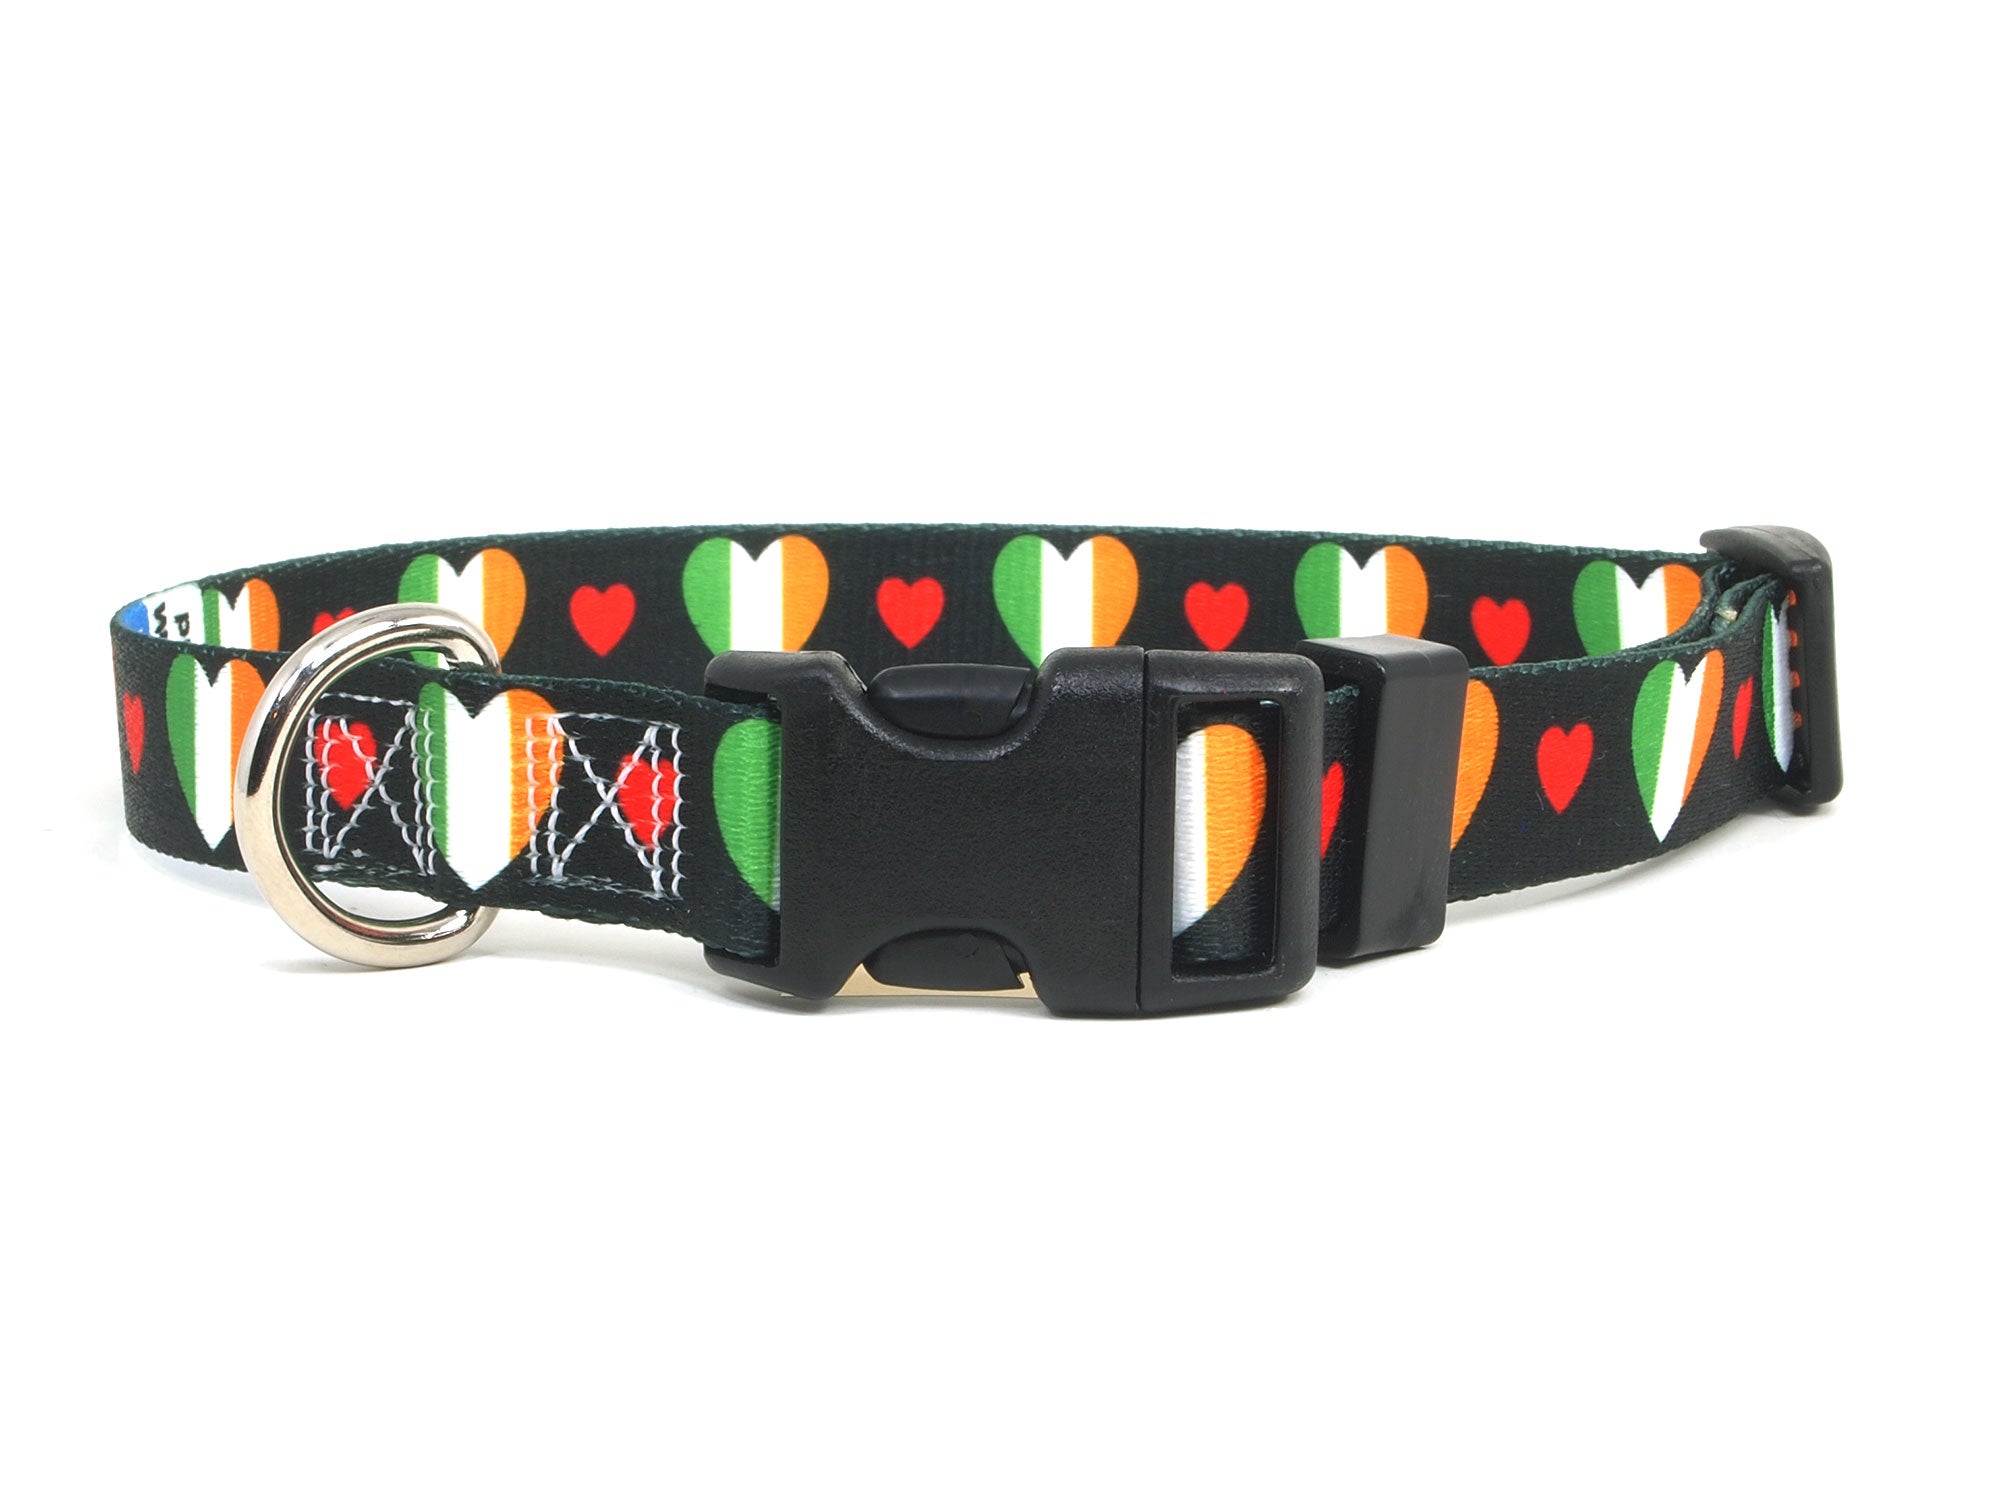 Black Dog Collar with Ireland Hearts Pattern